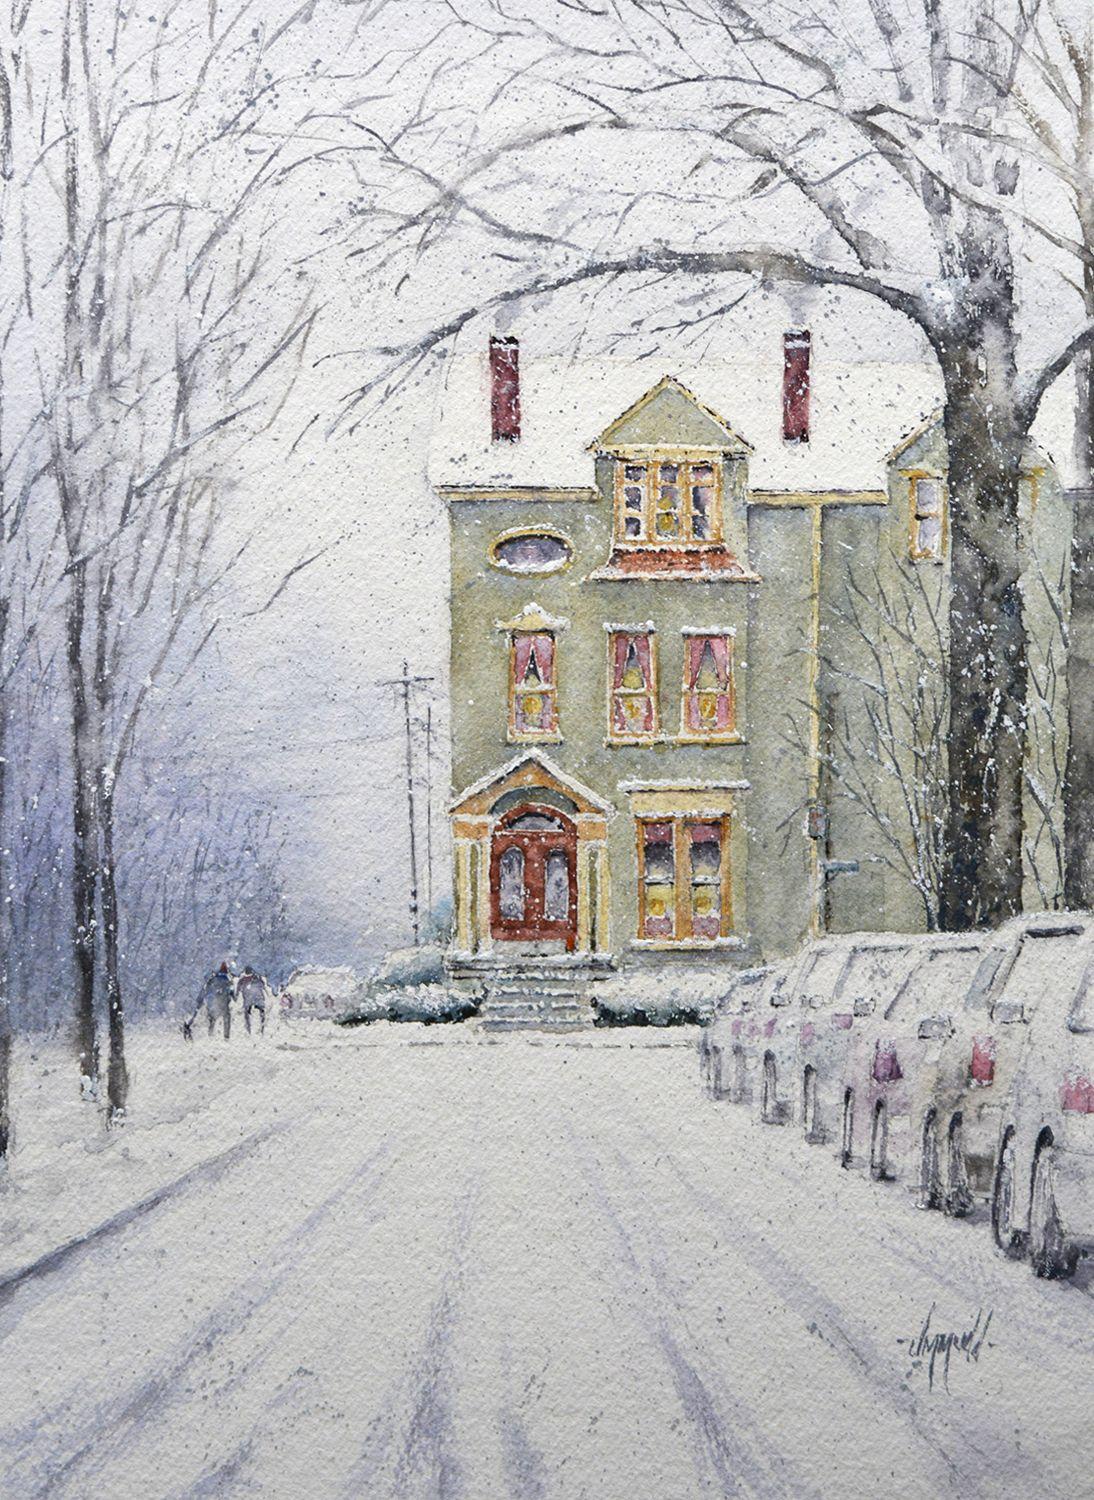 A Cozy Snow Day, Original Painting